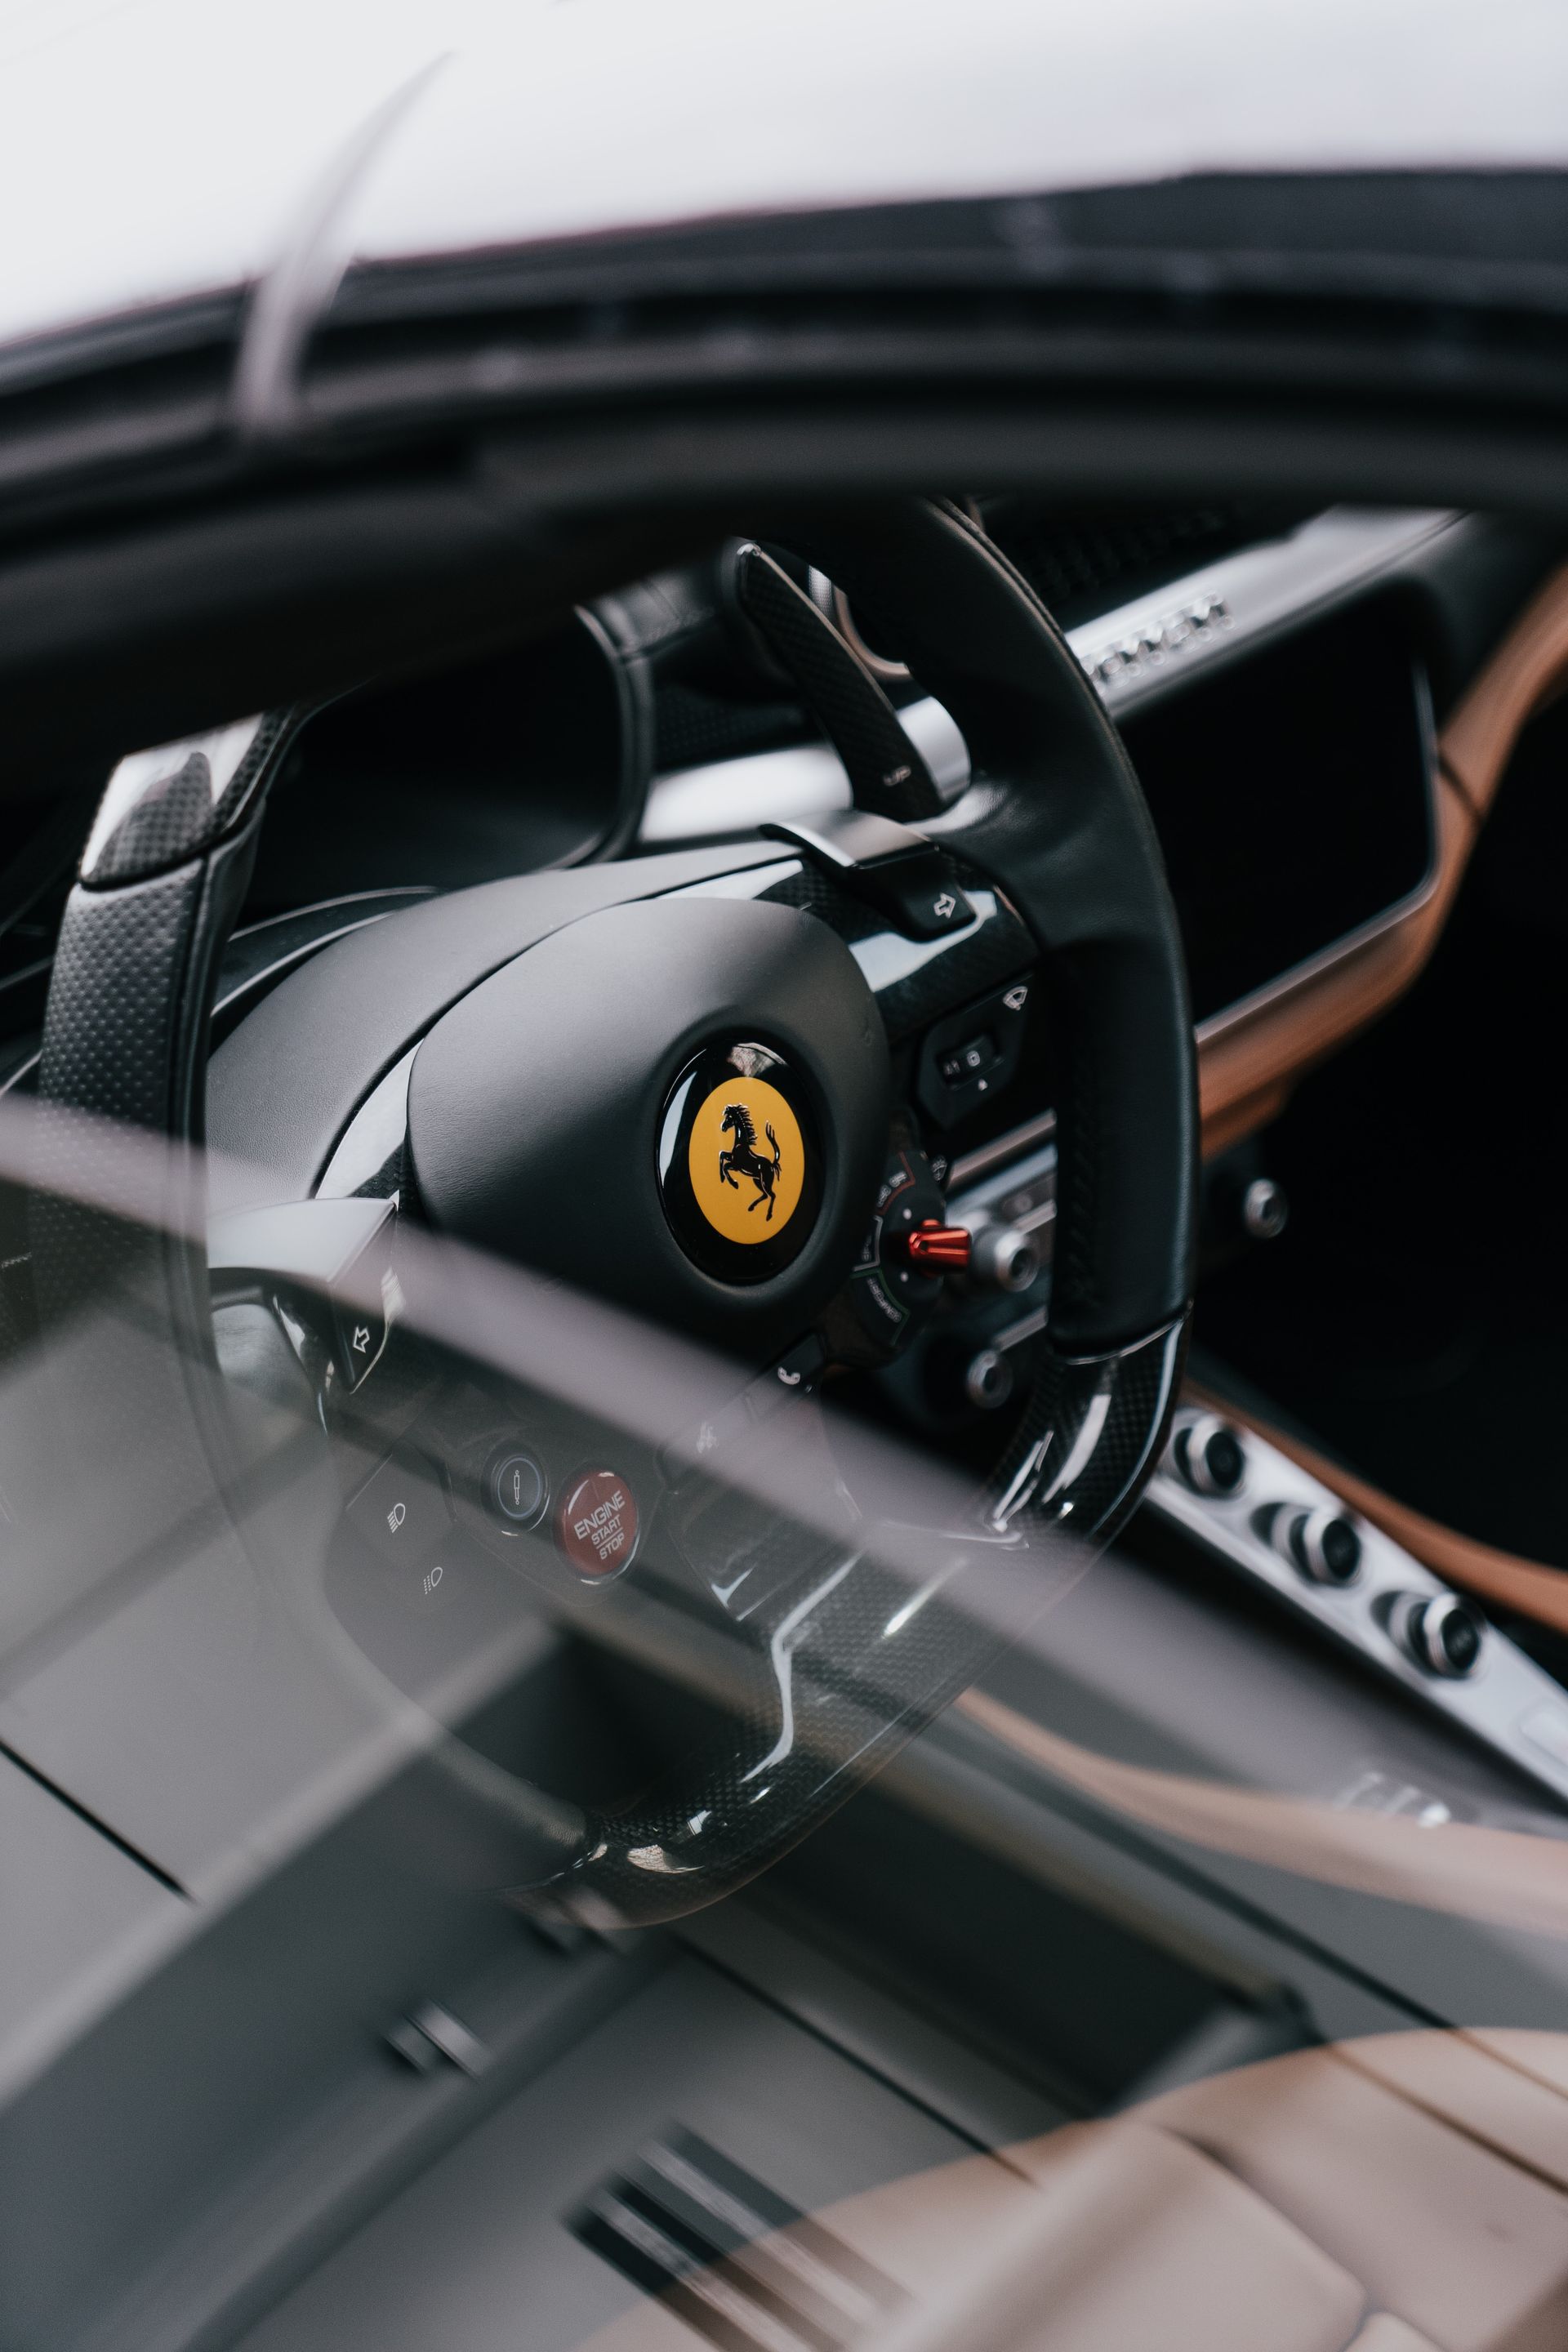 Steering wheel and interior of a Ferrari car.